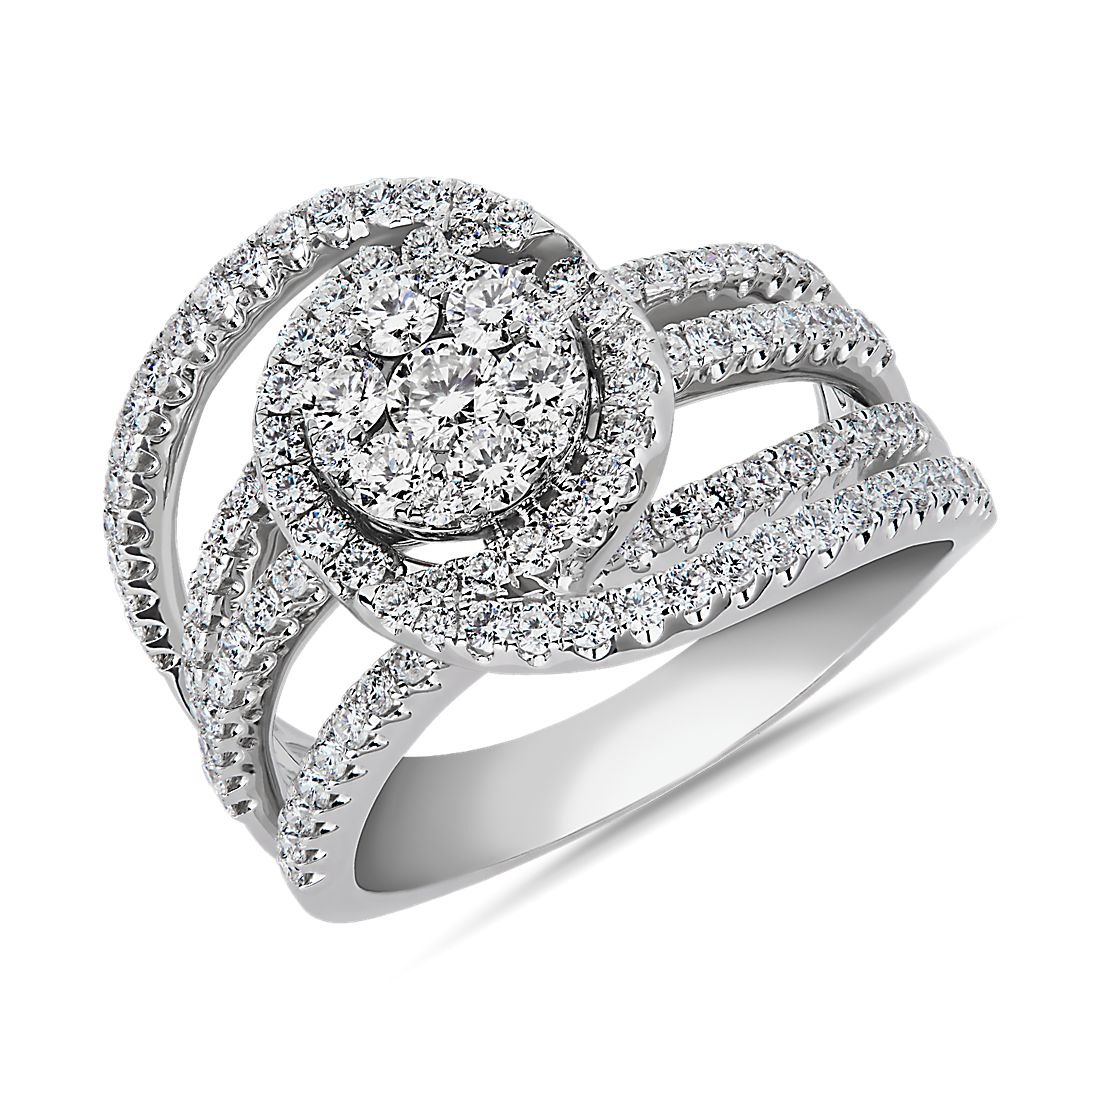 Swirling Halo Diamond Fashion Ring in 14k White Gold (1 1/3 ct. tw.)